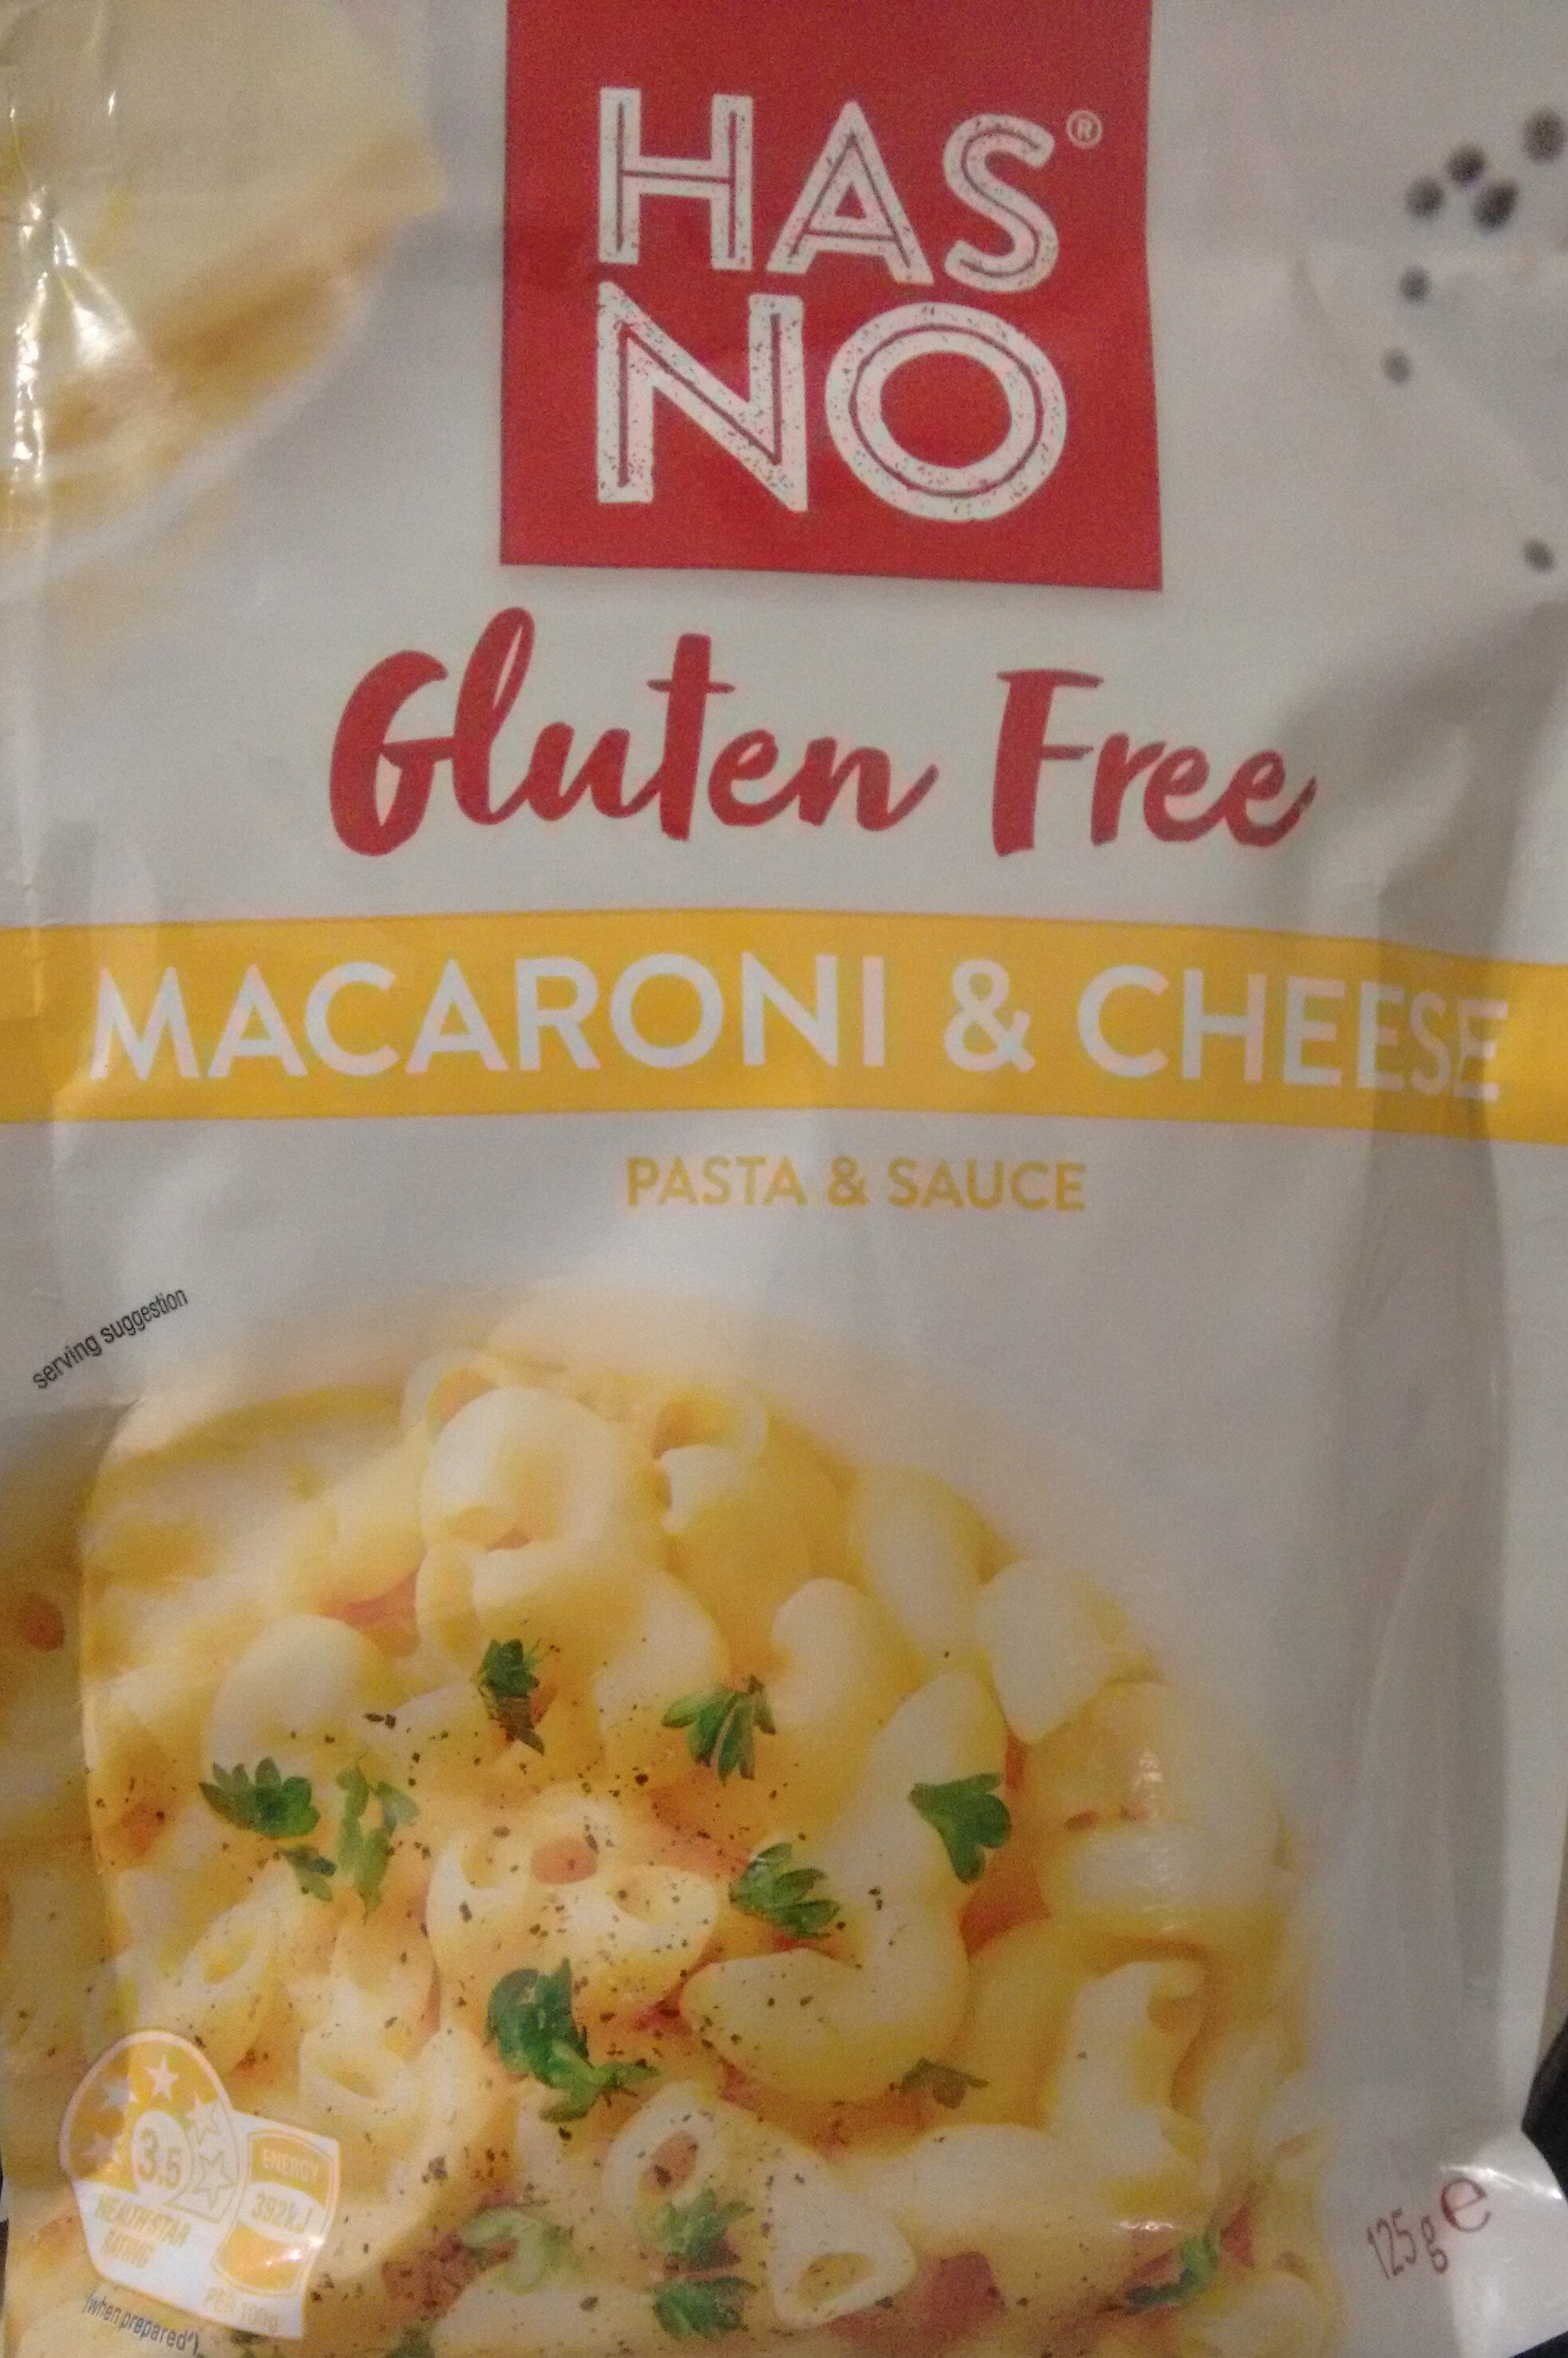 Gluten Free Macaroni & Cheese - Product